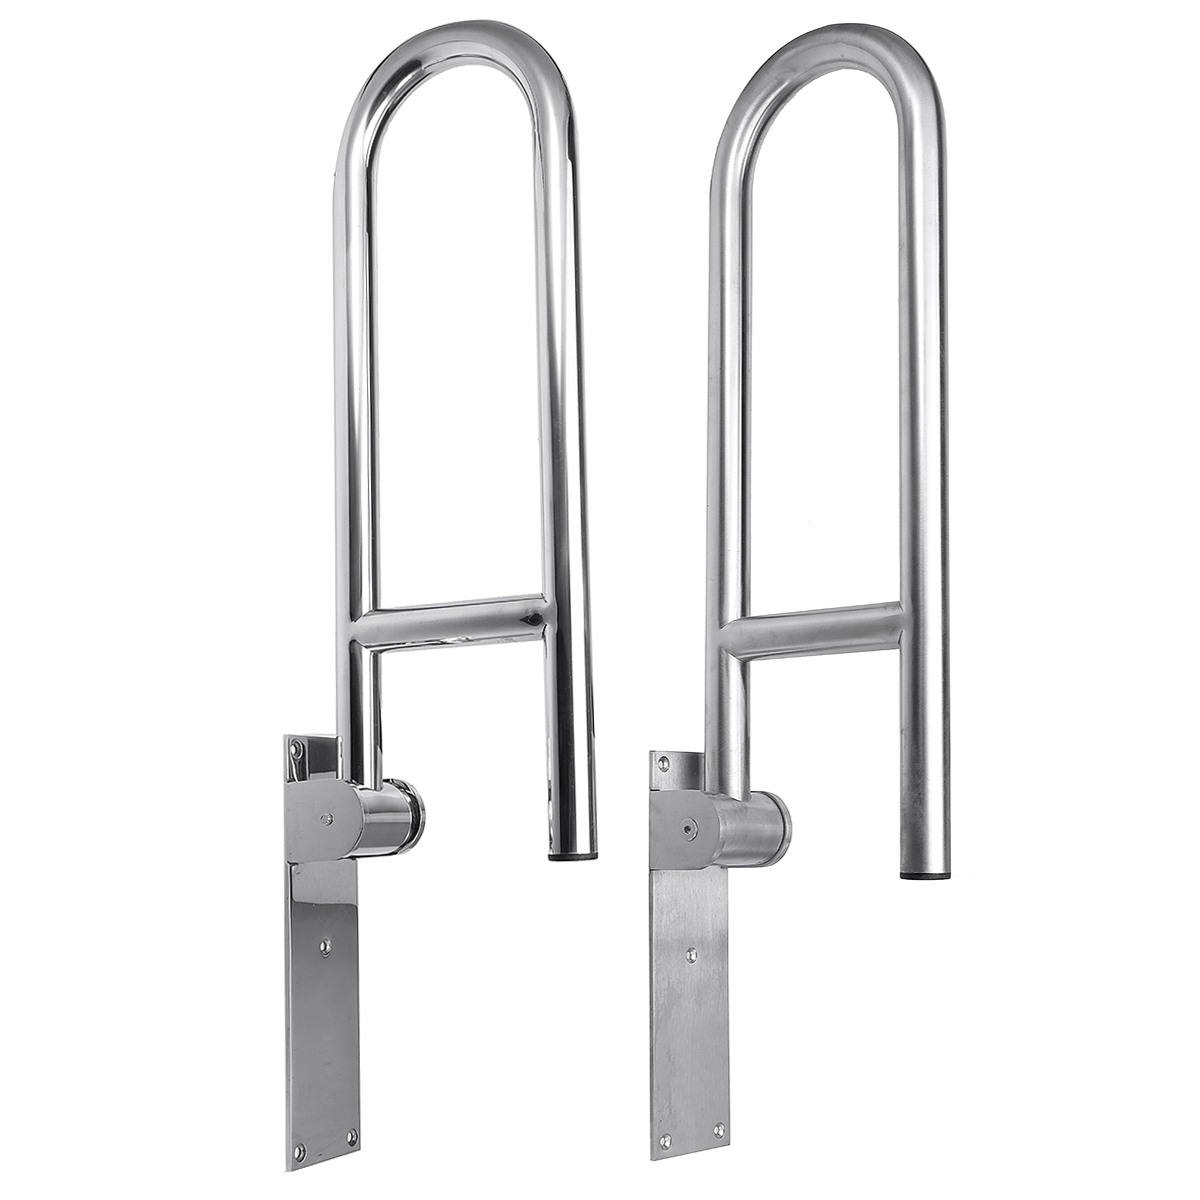 Stainless-Steel-Toilet-Safety-Frame-Rail-Grab-Bar-Handicap-Bathroom-Hand-Grips-1650108-3